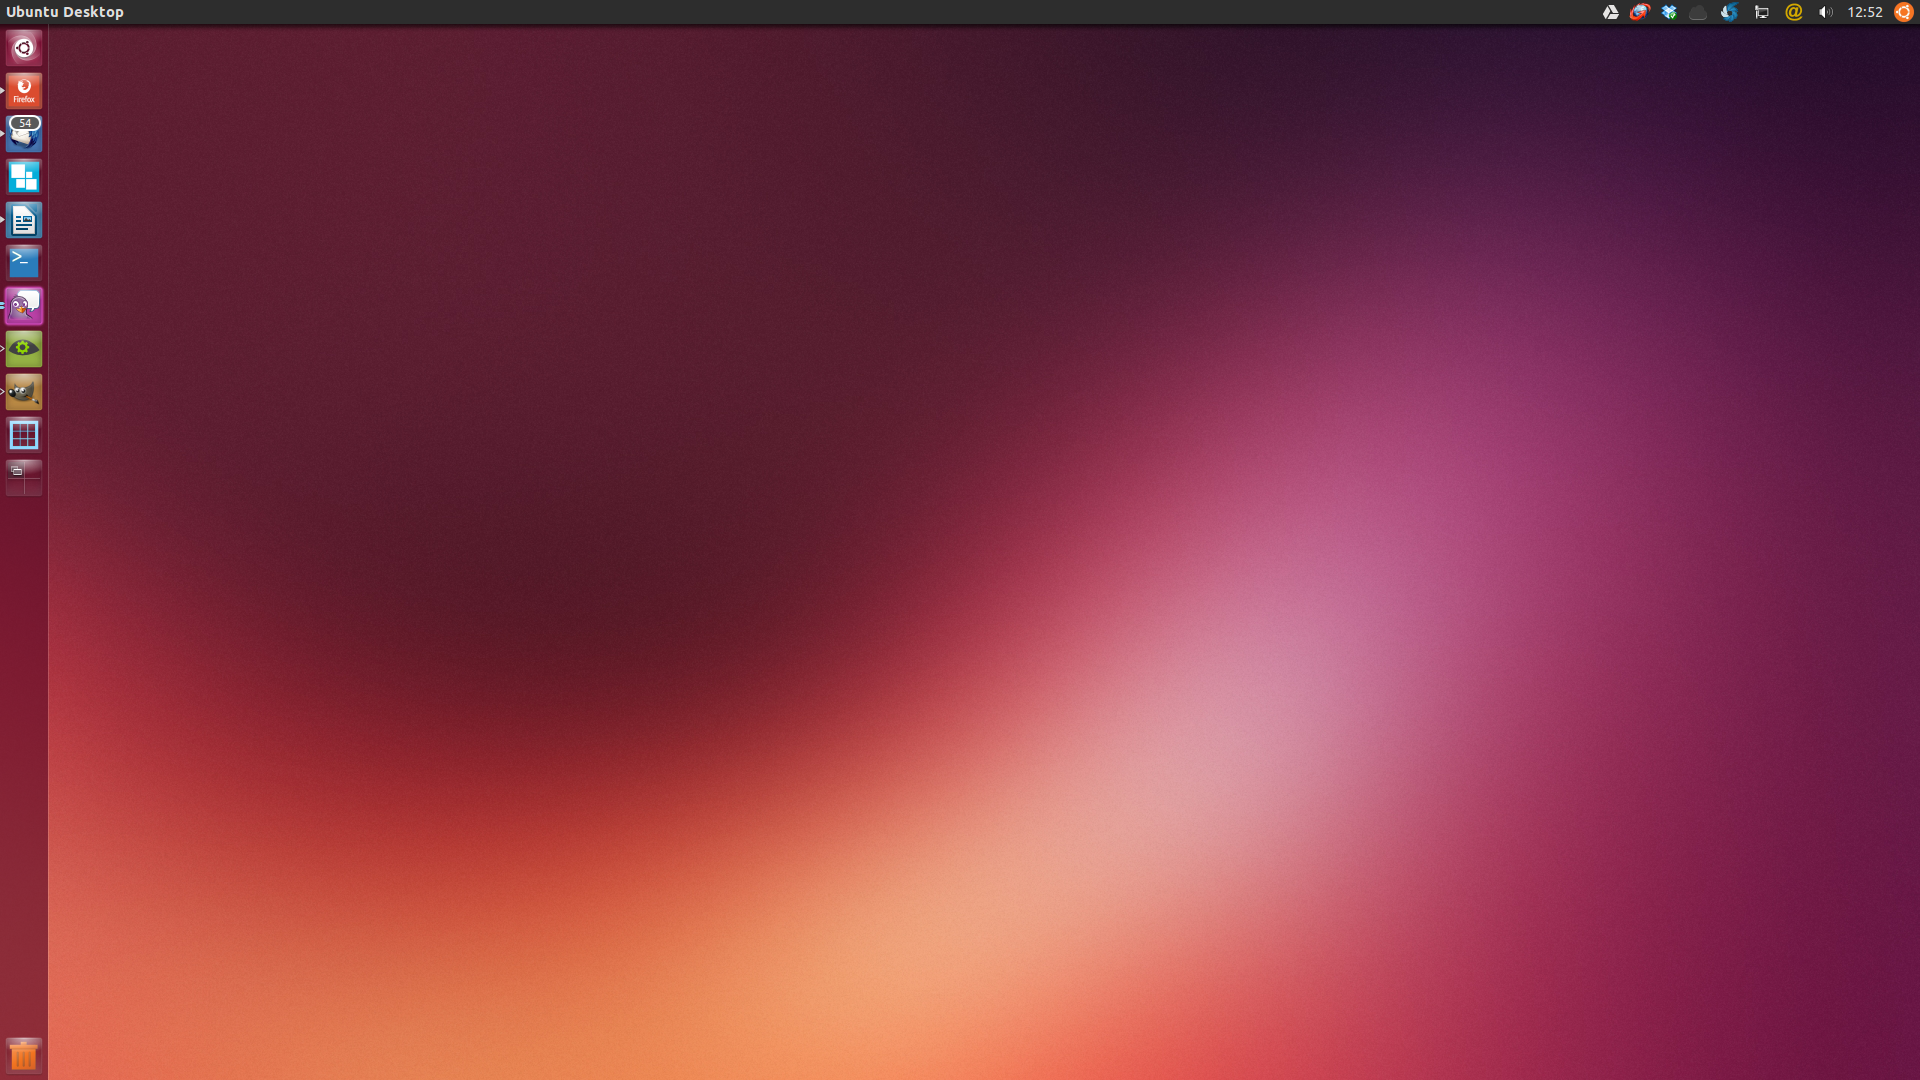 Official Ubuntu Wallpaper Ubuntu provides the largest 1920x1080